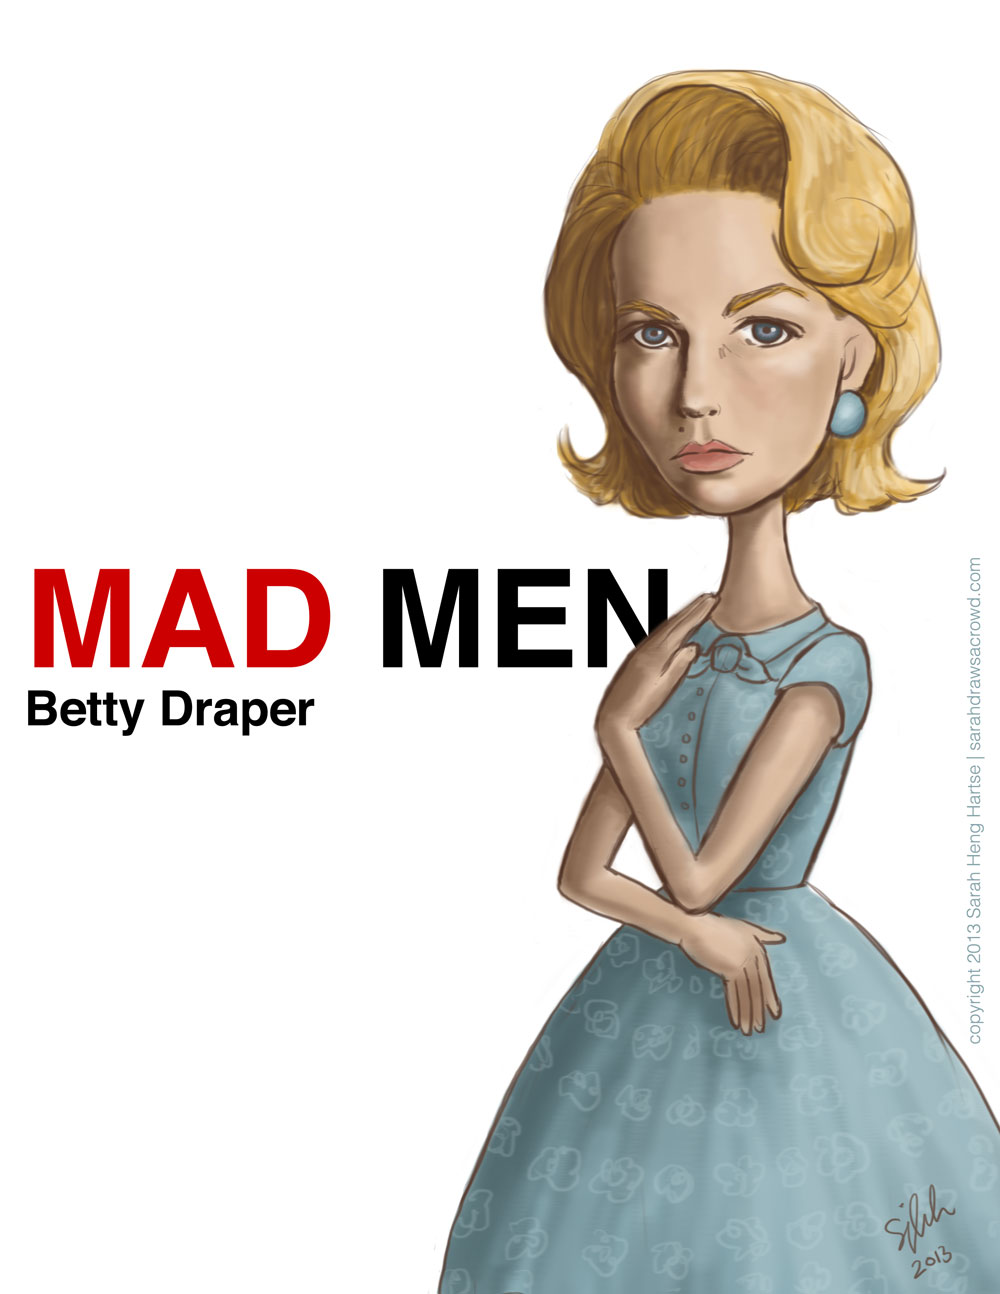 Mad Men's Betty Draper, played by January Jones